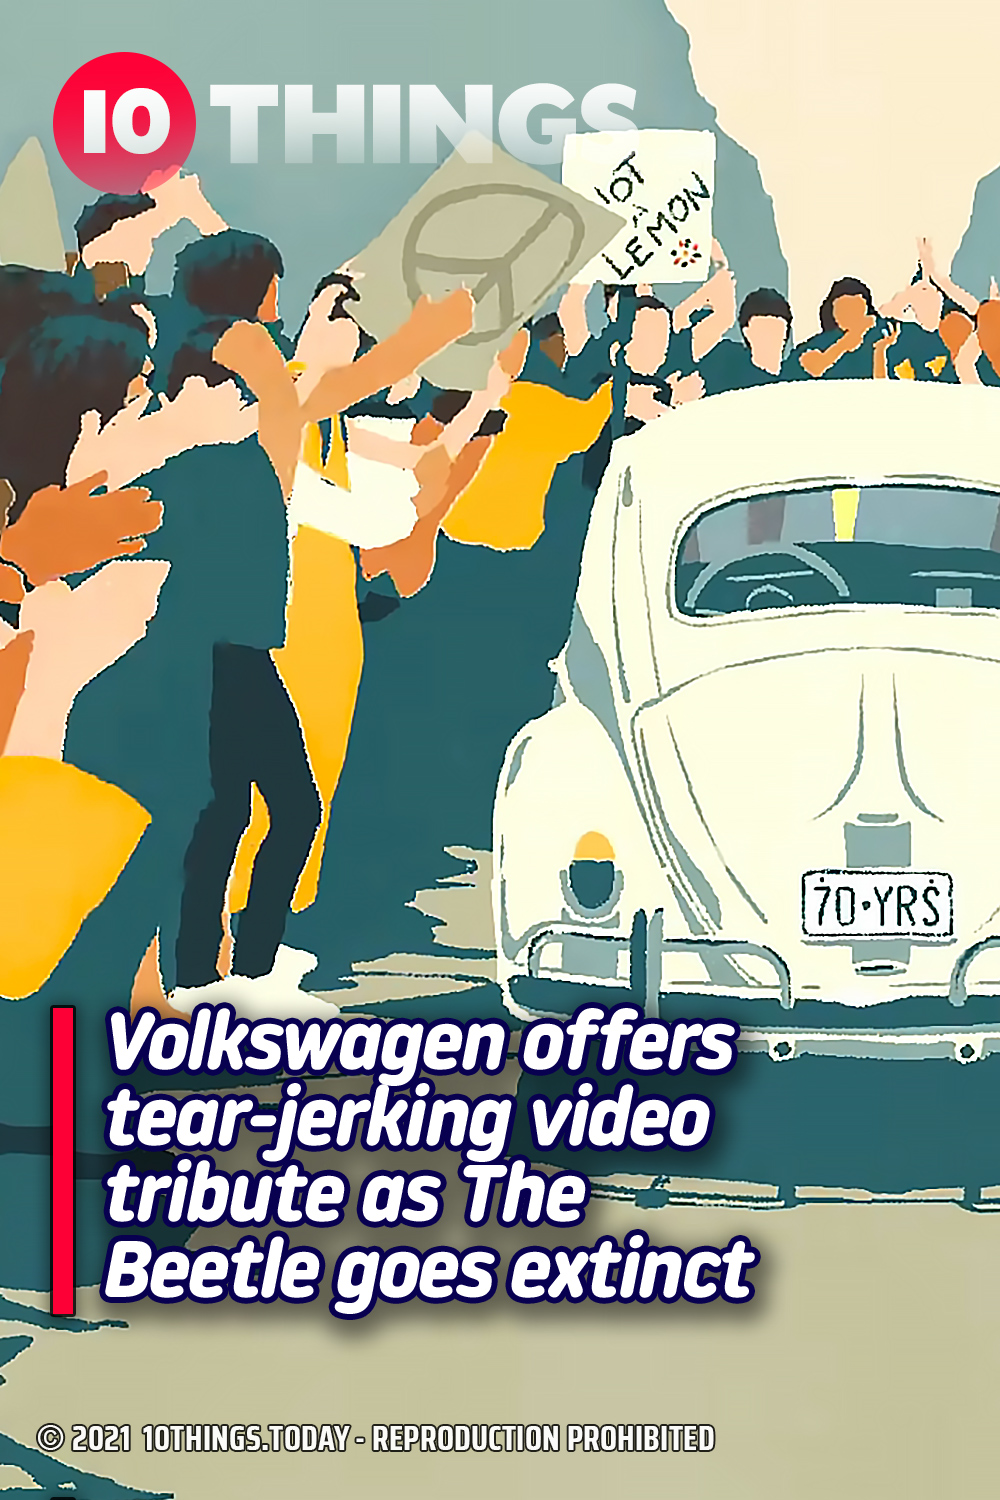 Volkswagen offers tear-jerking video tribute as The Beetle goes extinct